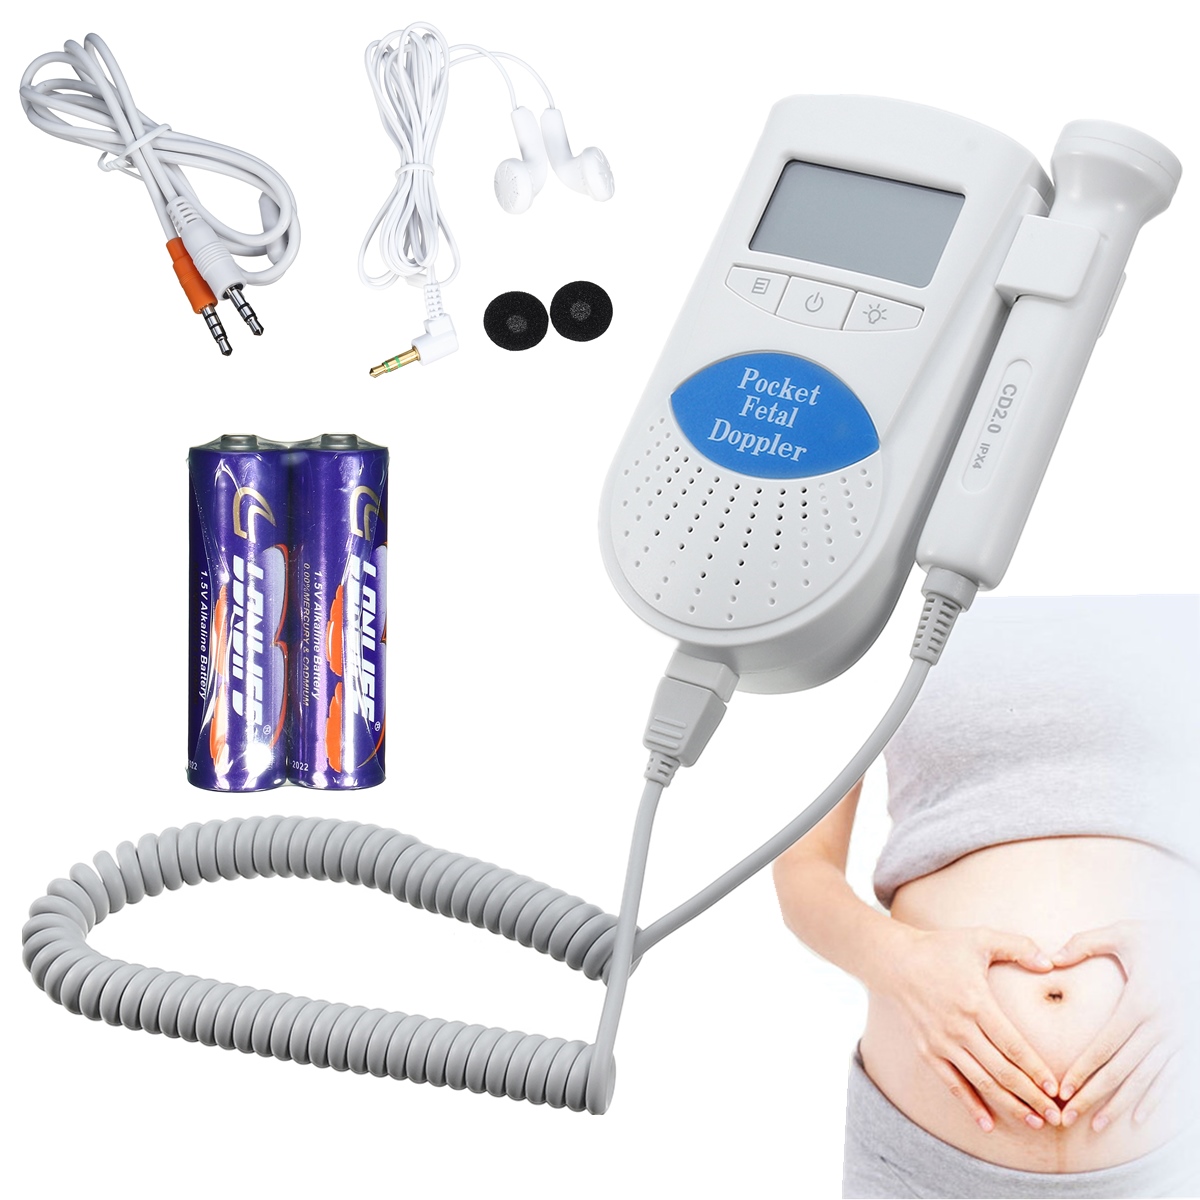 

Sonoline B Pocket Fetal Монитор Подсветка LCD с Гель